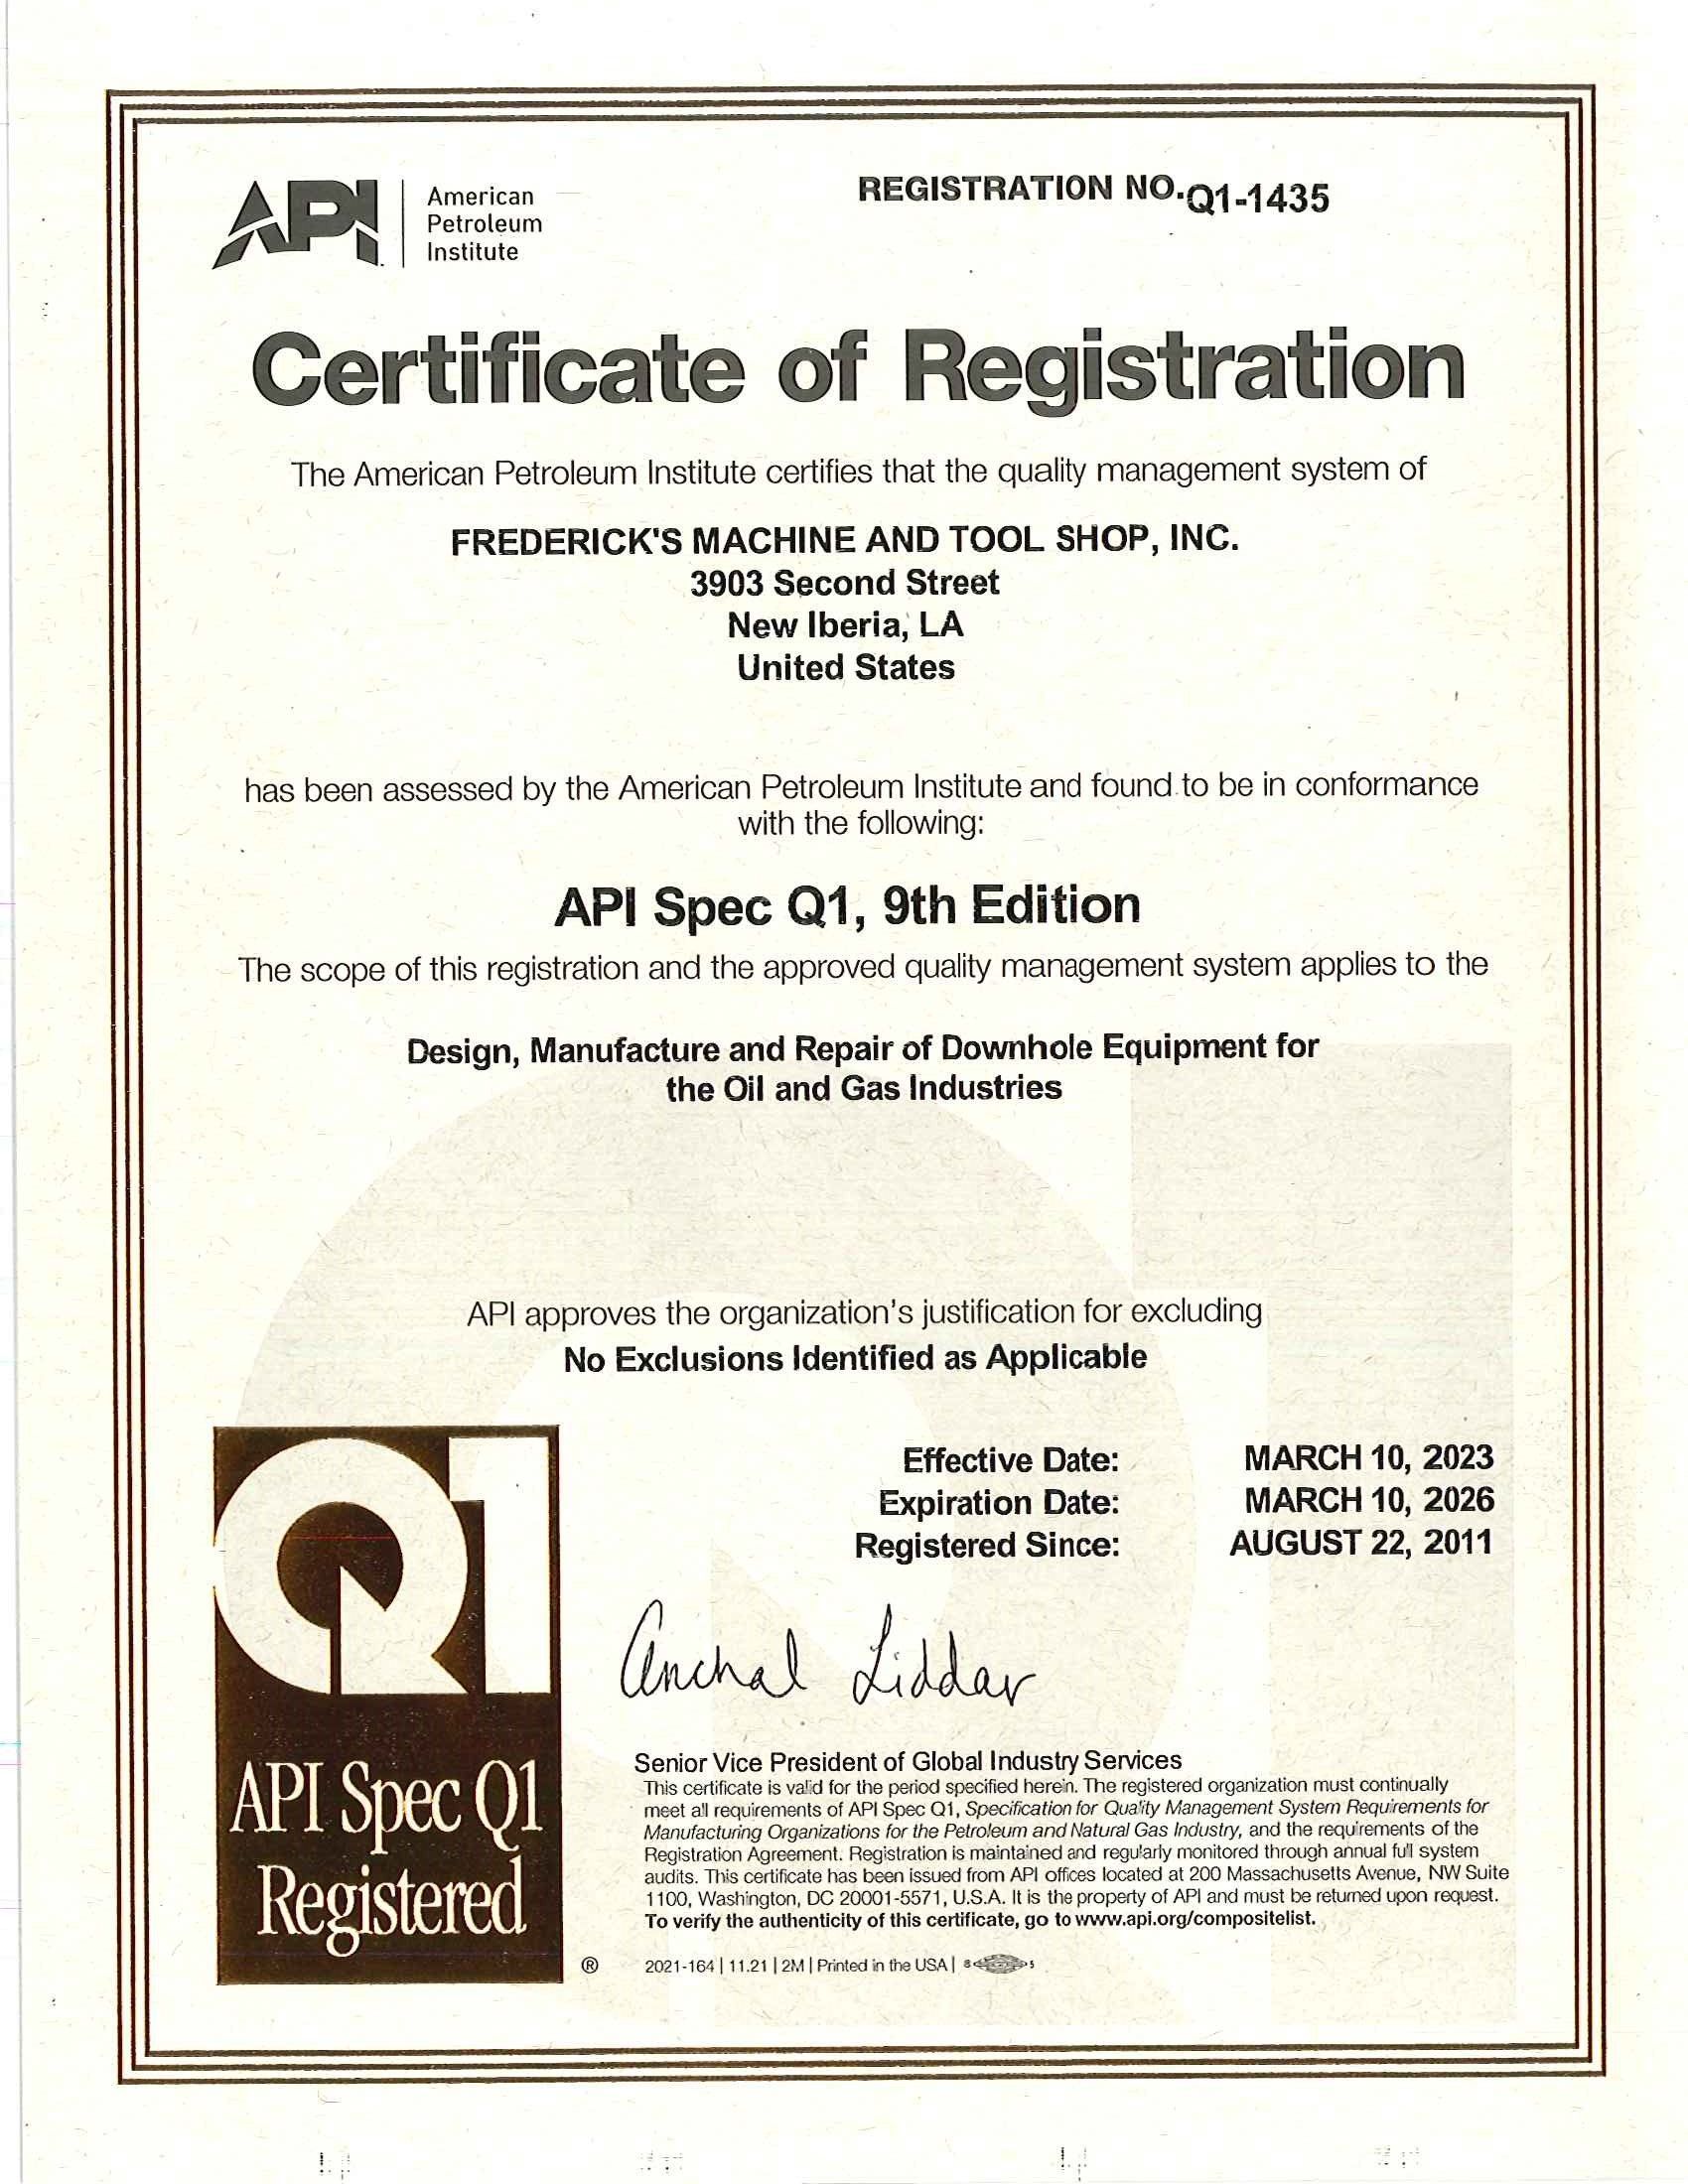 API Certification for Frederick’s Quality Management Program